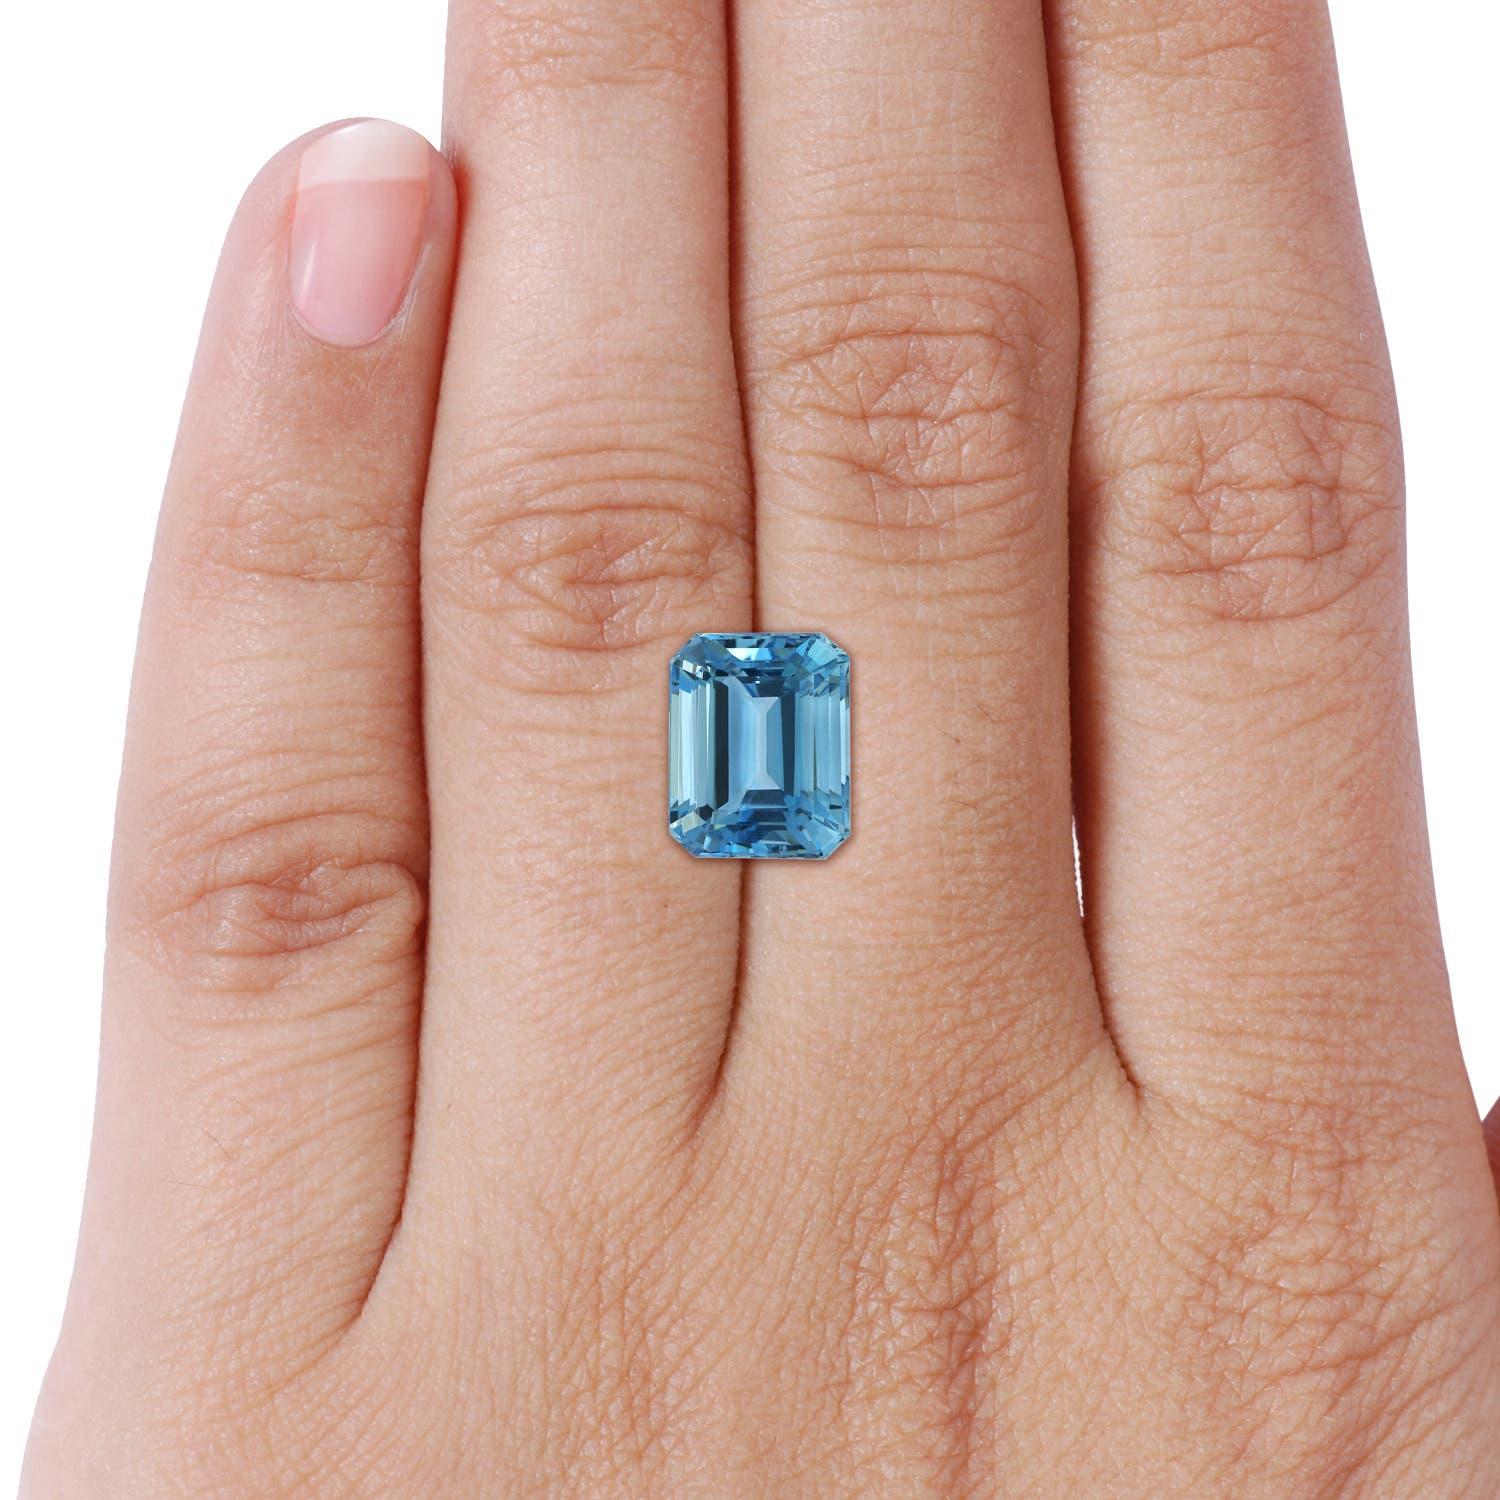 For Sale:  ANGARA GIA Certified Natural 5.04ct Aquamarine Diamond Ring in 14K White Gold 6